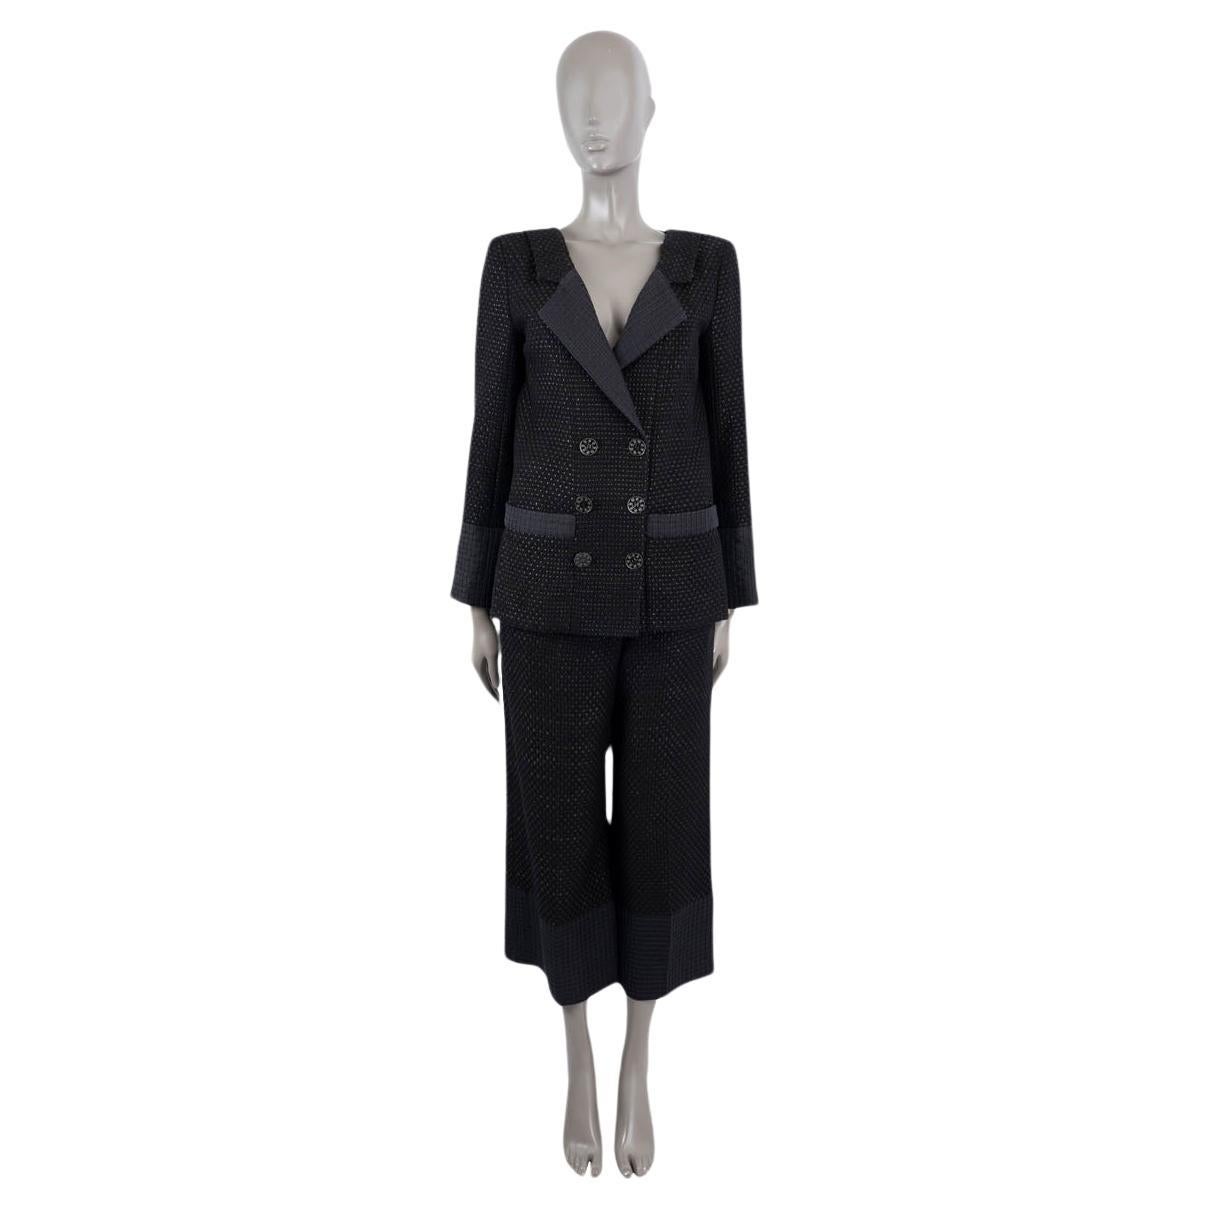 CHANEL black cotton 2016 16C SEOUL DOUBLE BREASTED PANT Suit 38 S